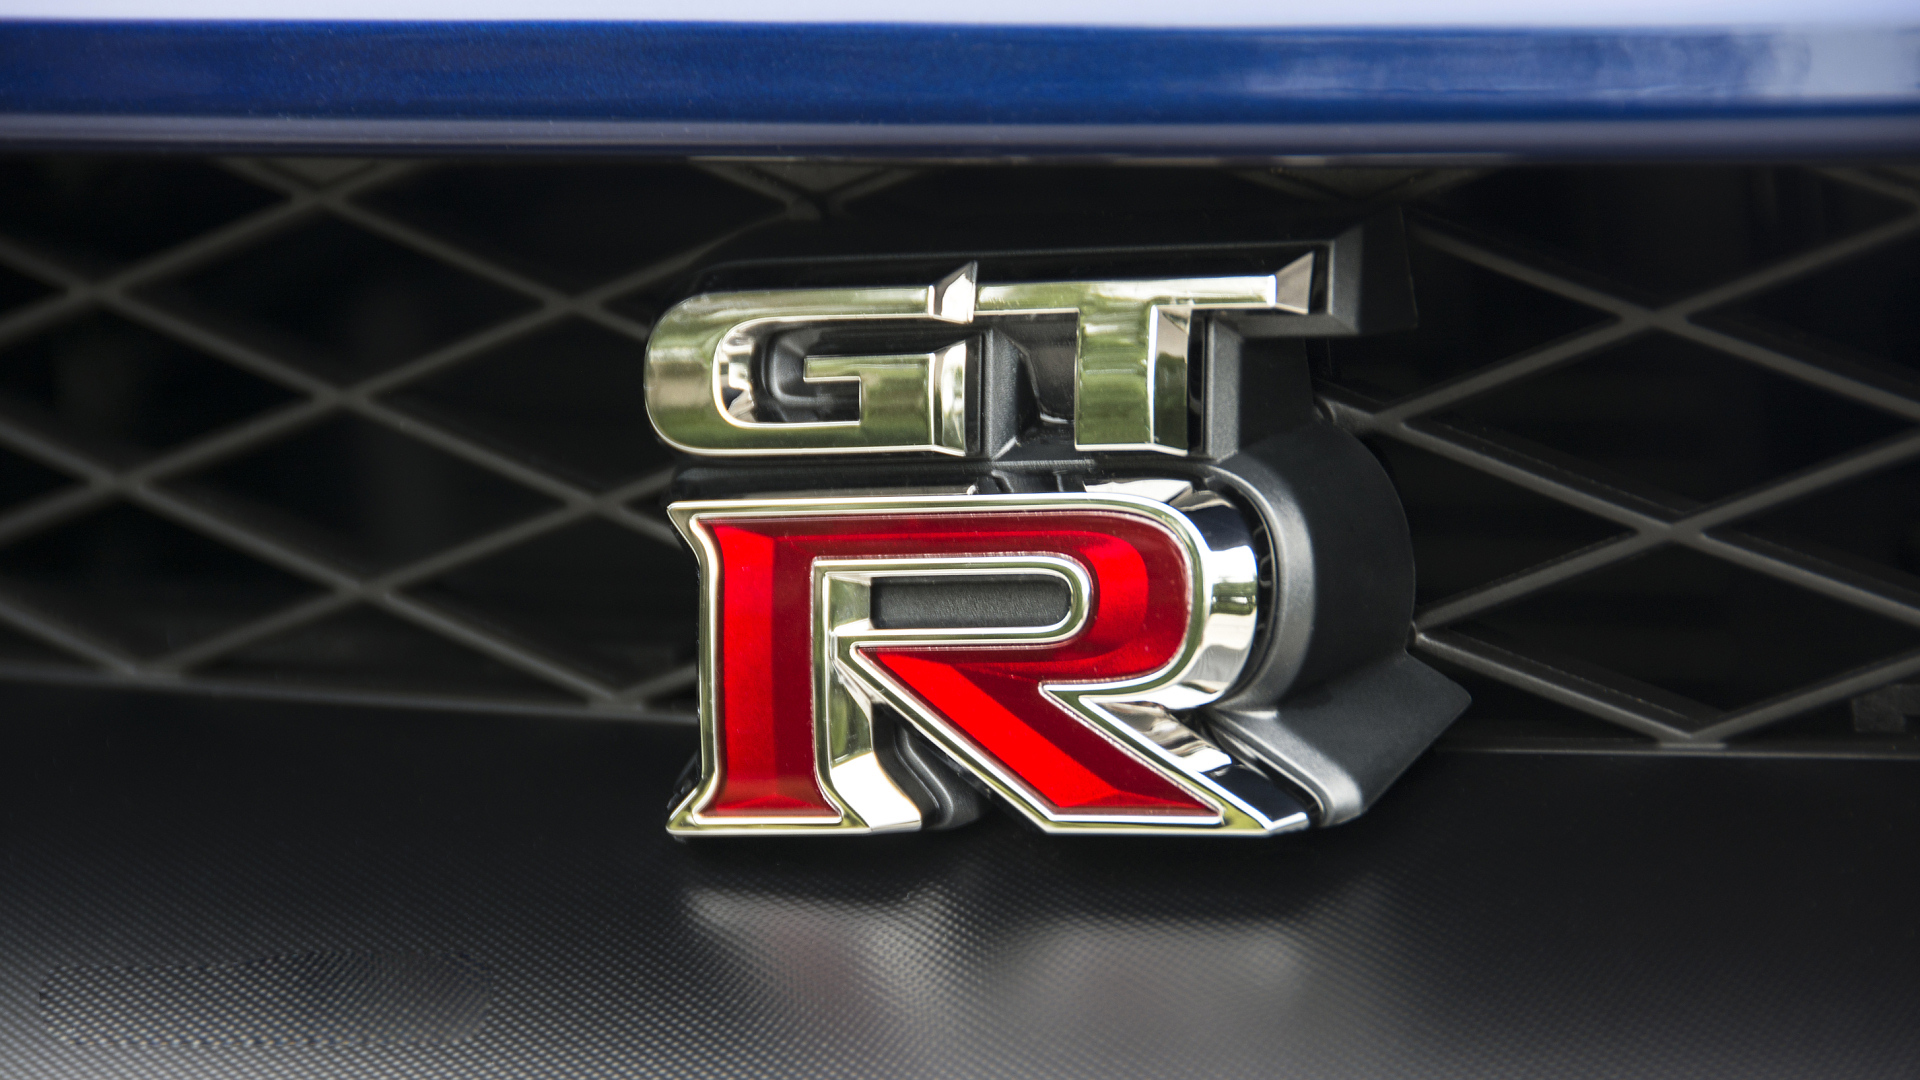 Top : New 52 Civic Type R Logo wallpaper (Free HD Download) | Honda, Honda  logo, Car logos